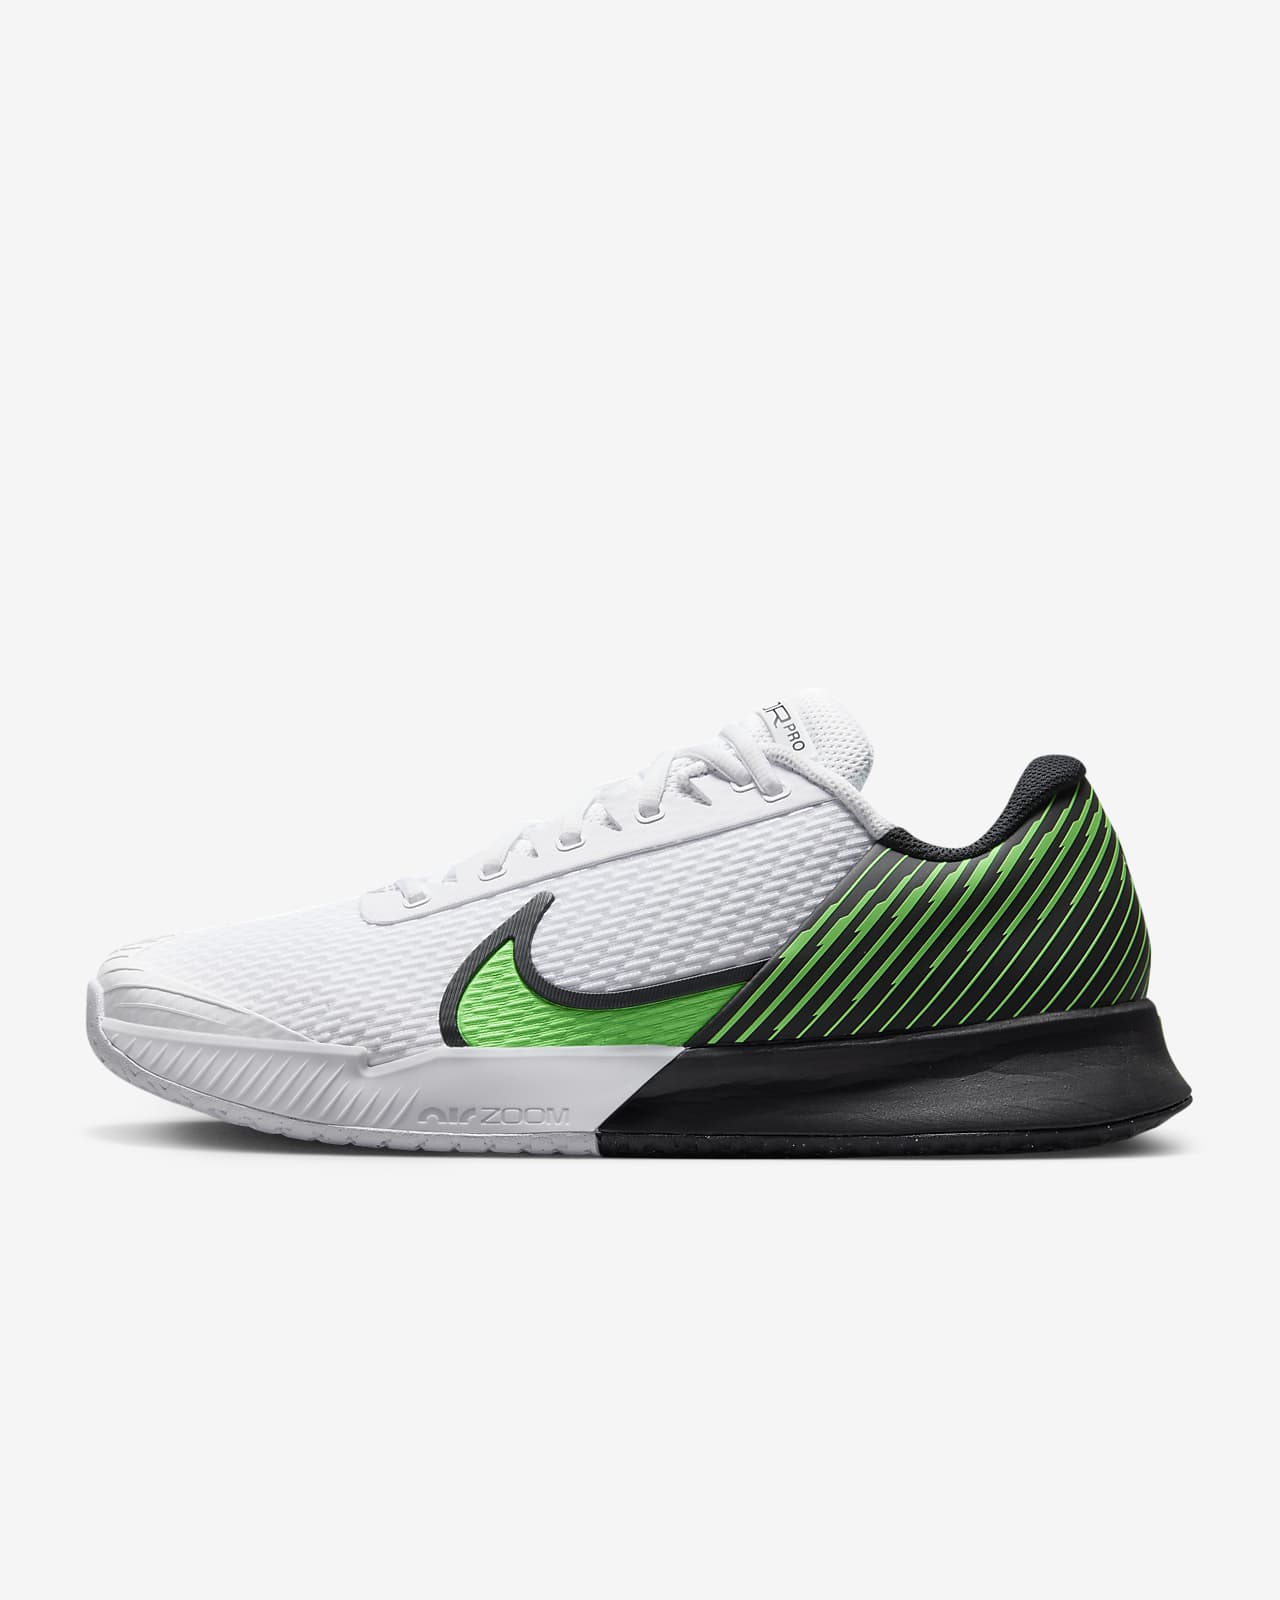 NikeCourt Air Zoom Vapor Pro 2 男款硬地球場網球鞋